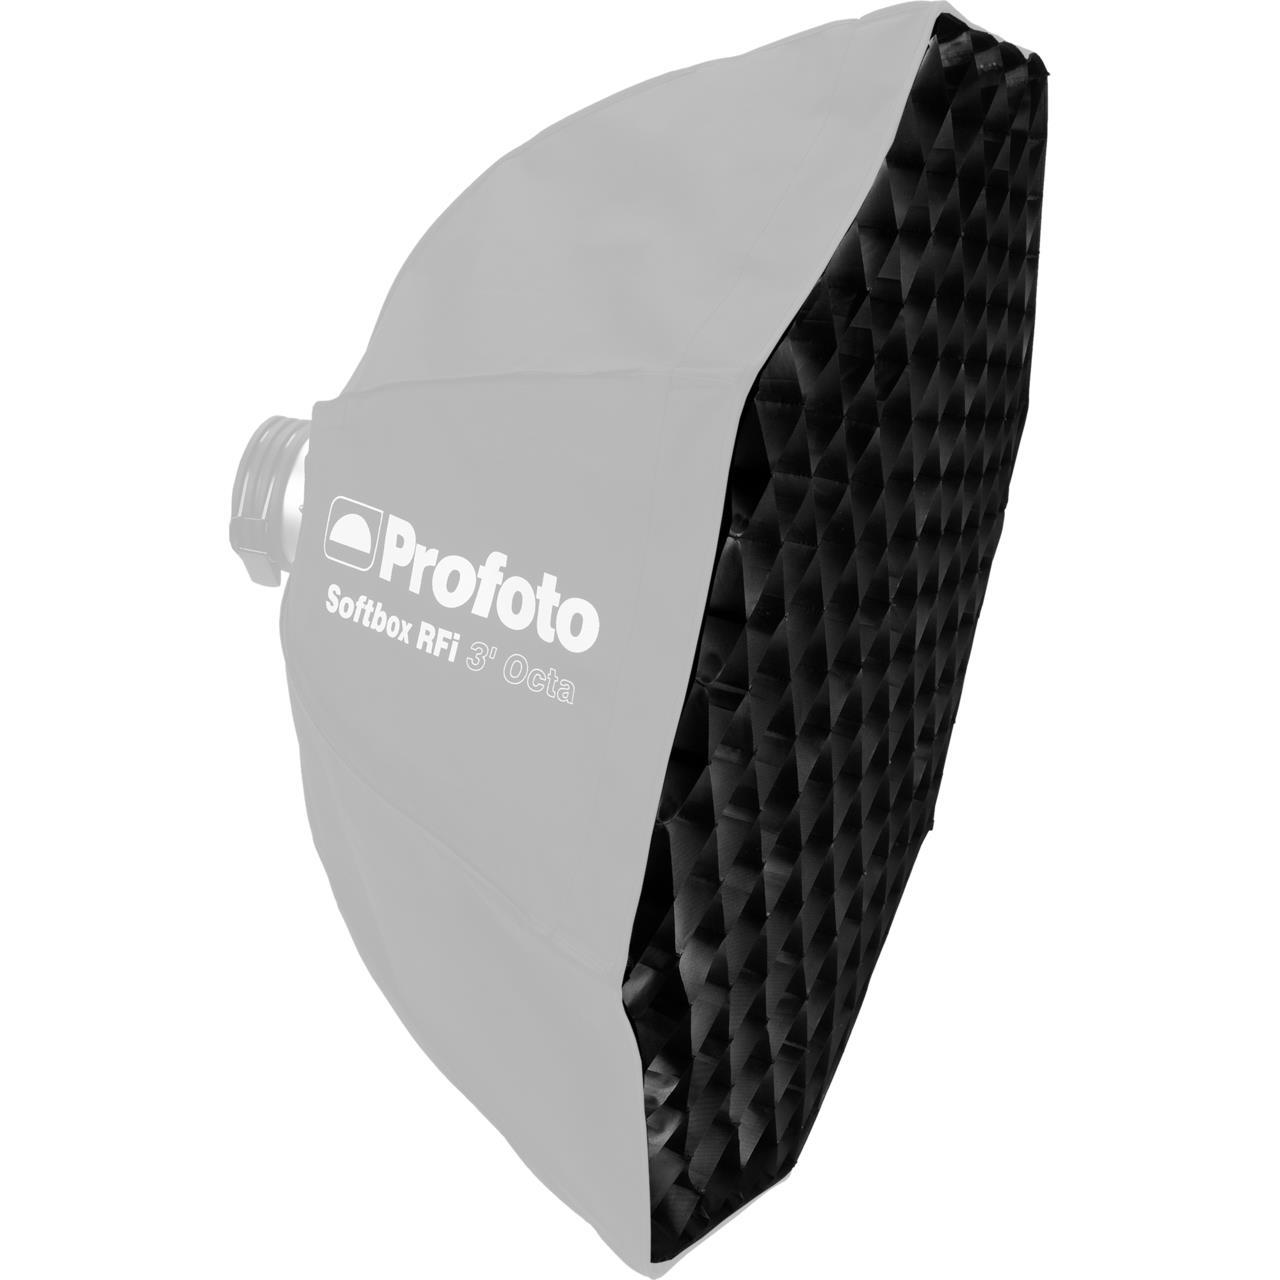 Profoto RFi ソフトグリッド オクタ型をオンラインで購入 | Profoto (JP)